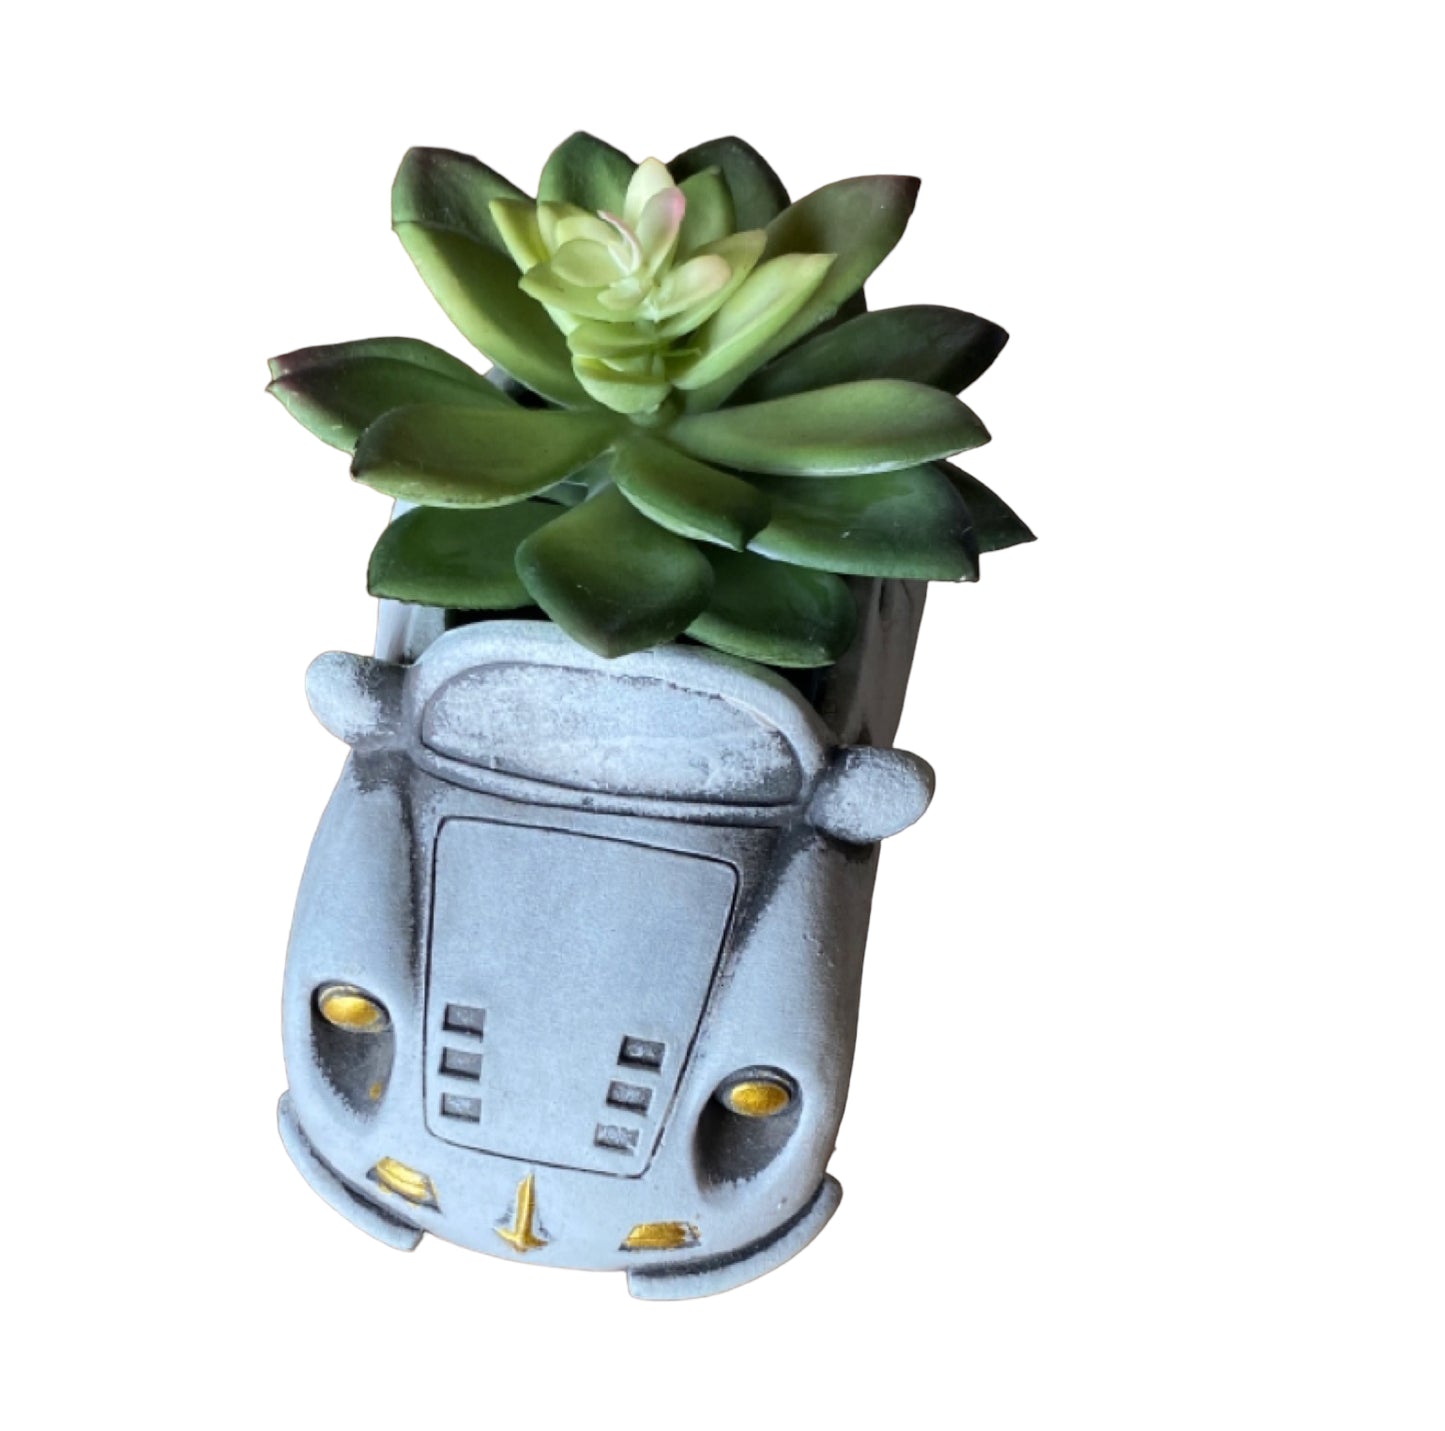 Car Convertible Planter Pot